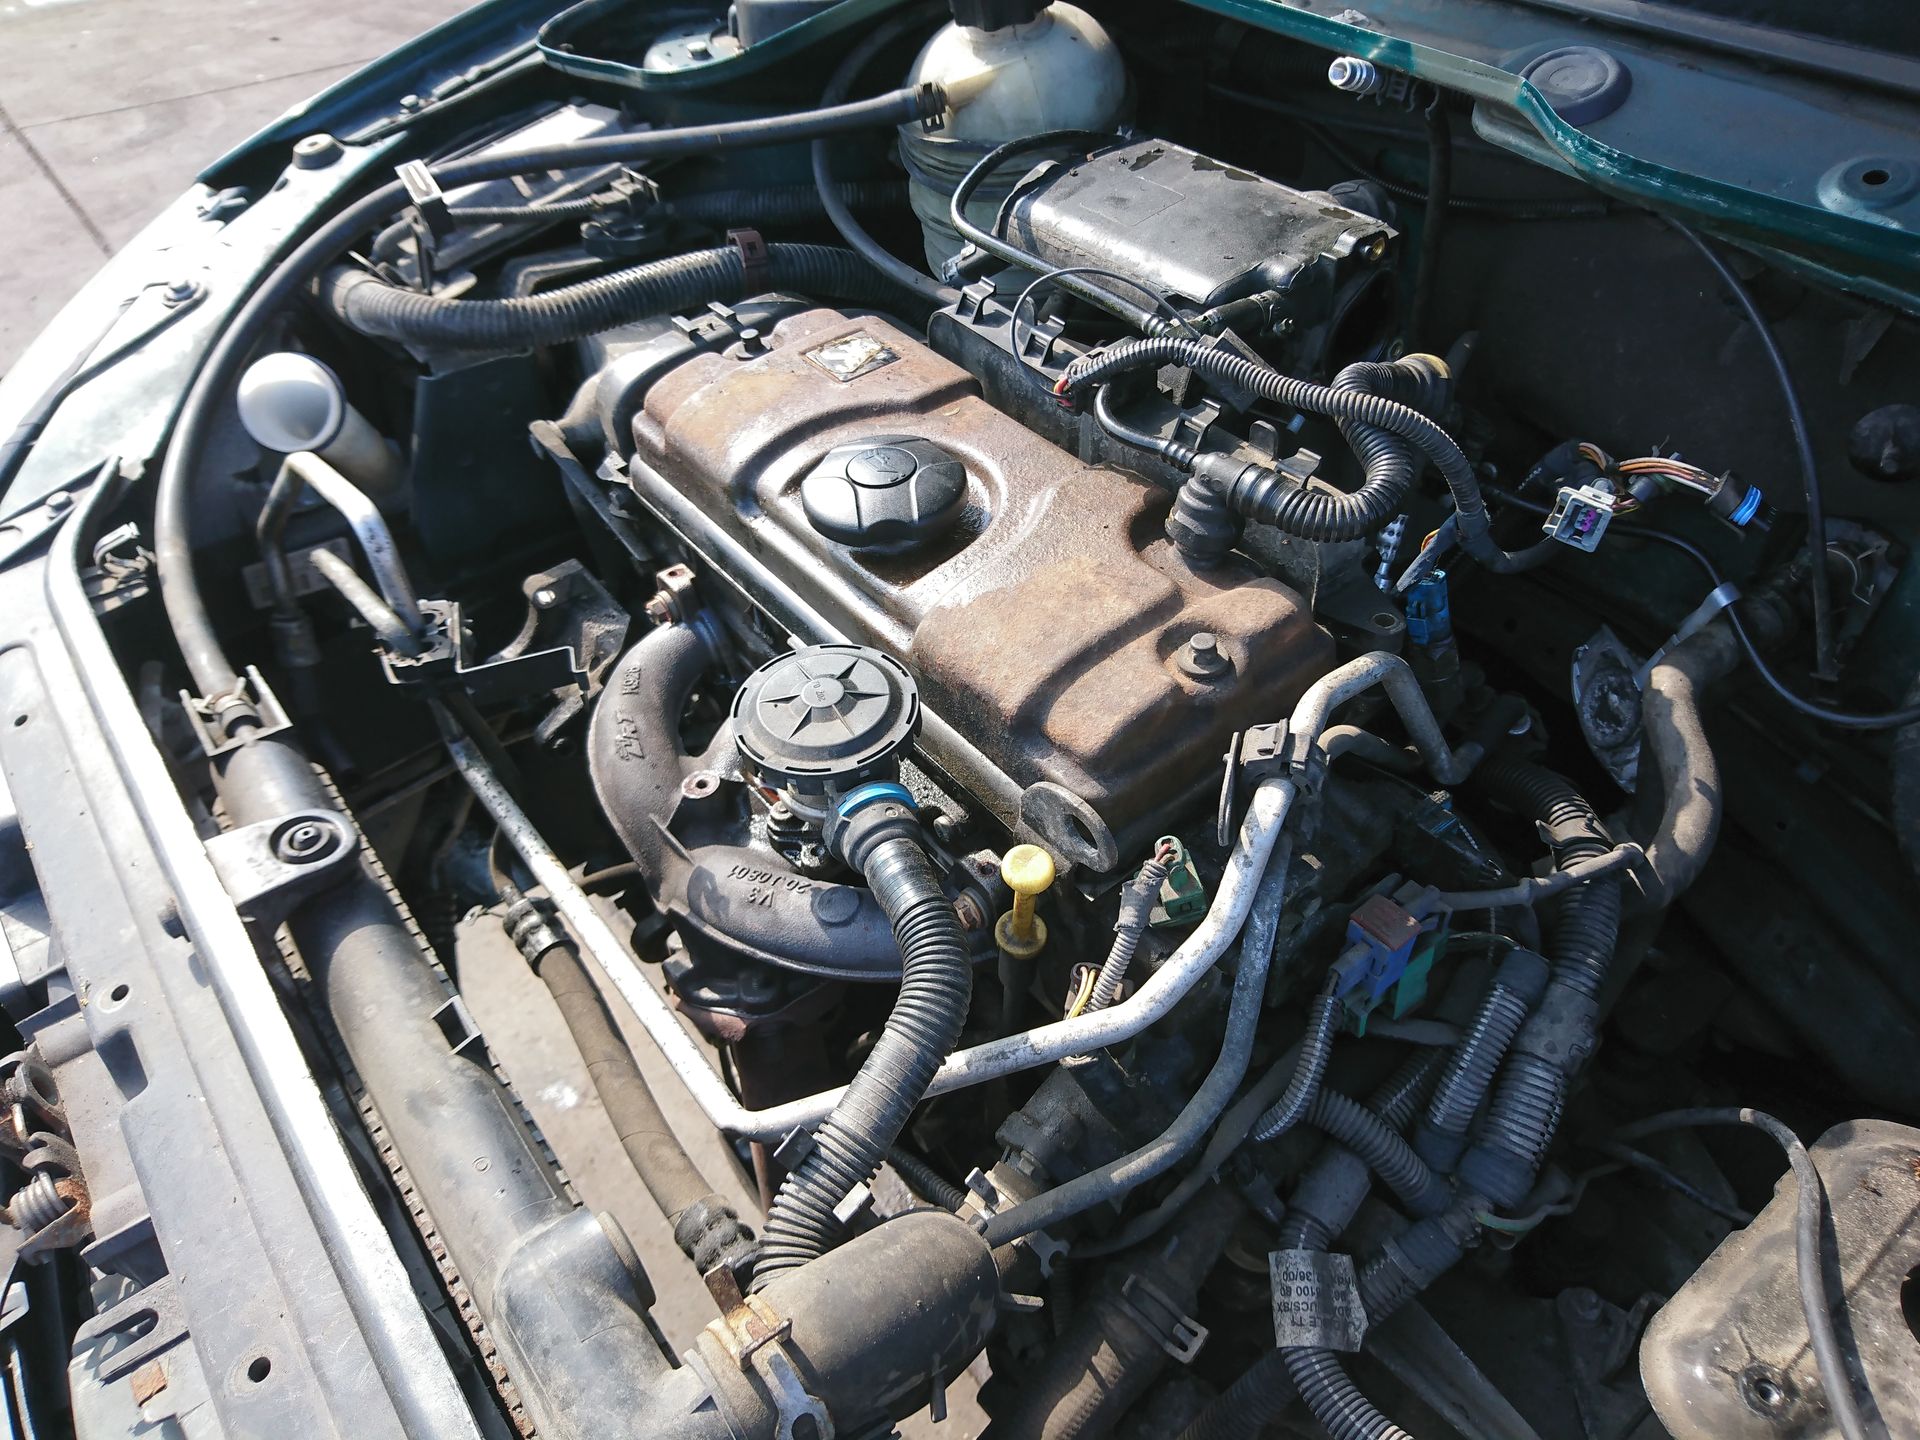 Peugeot 206 geprüfter original Motor 1.4l 55kW Benzin KFX 108Tkm Bj 2000